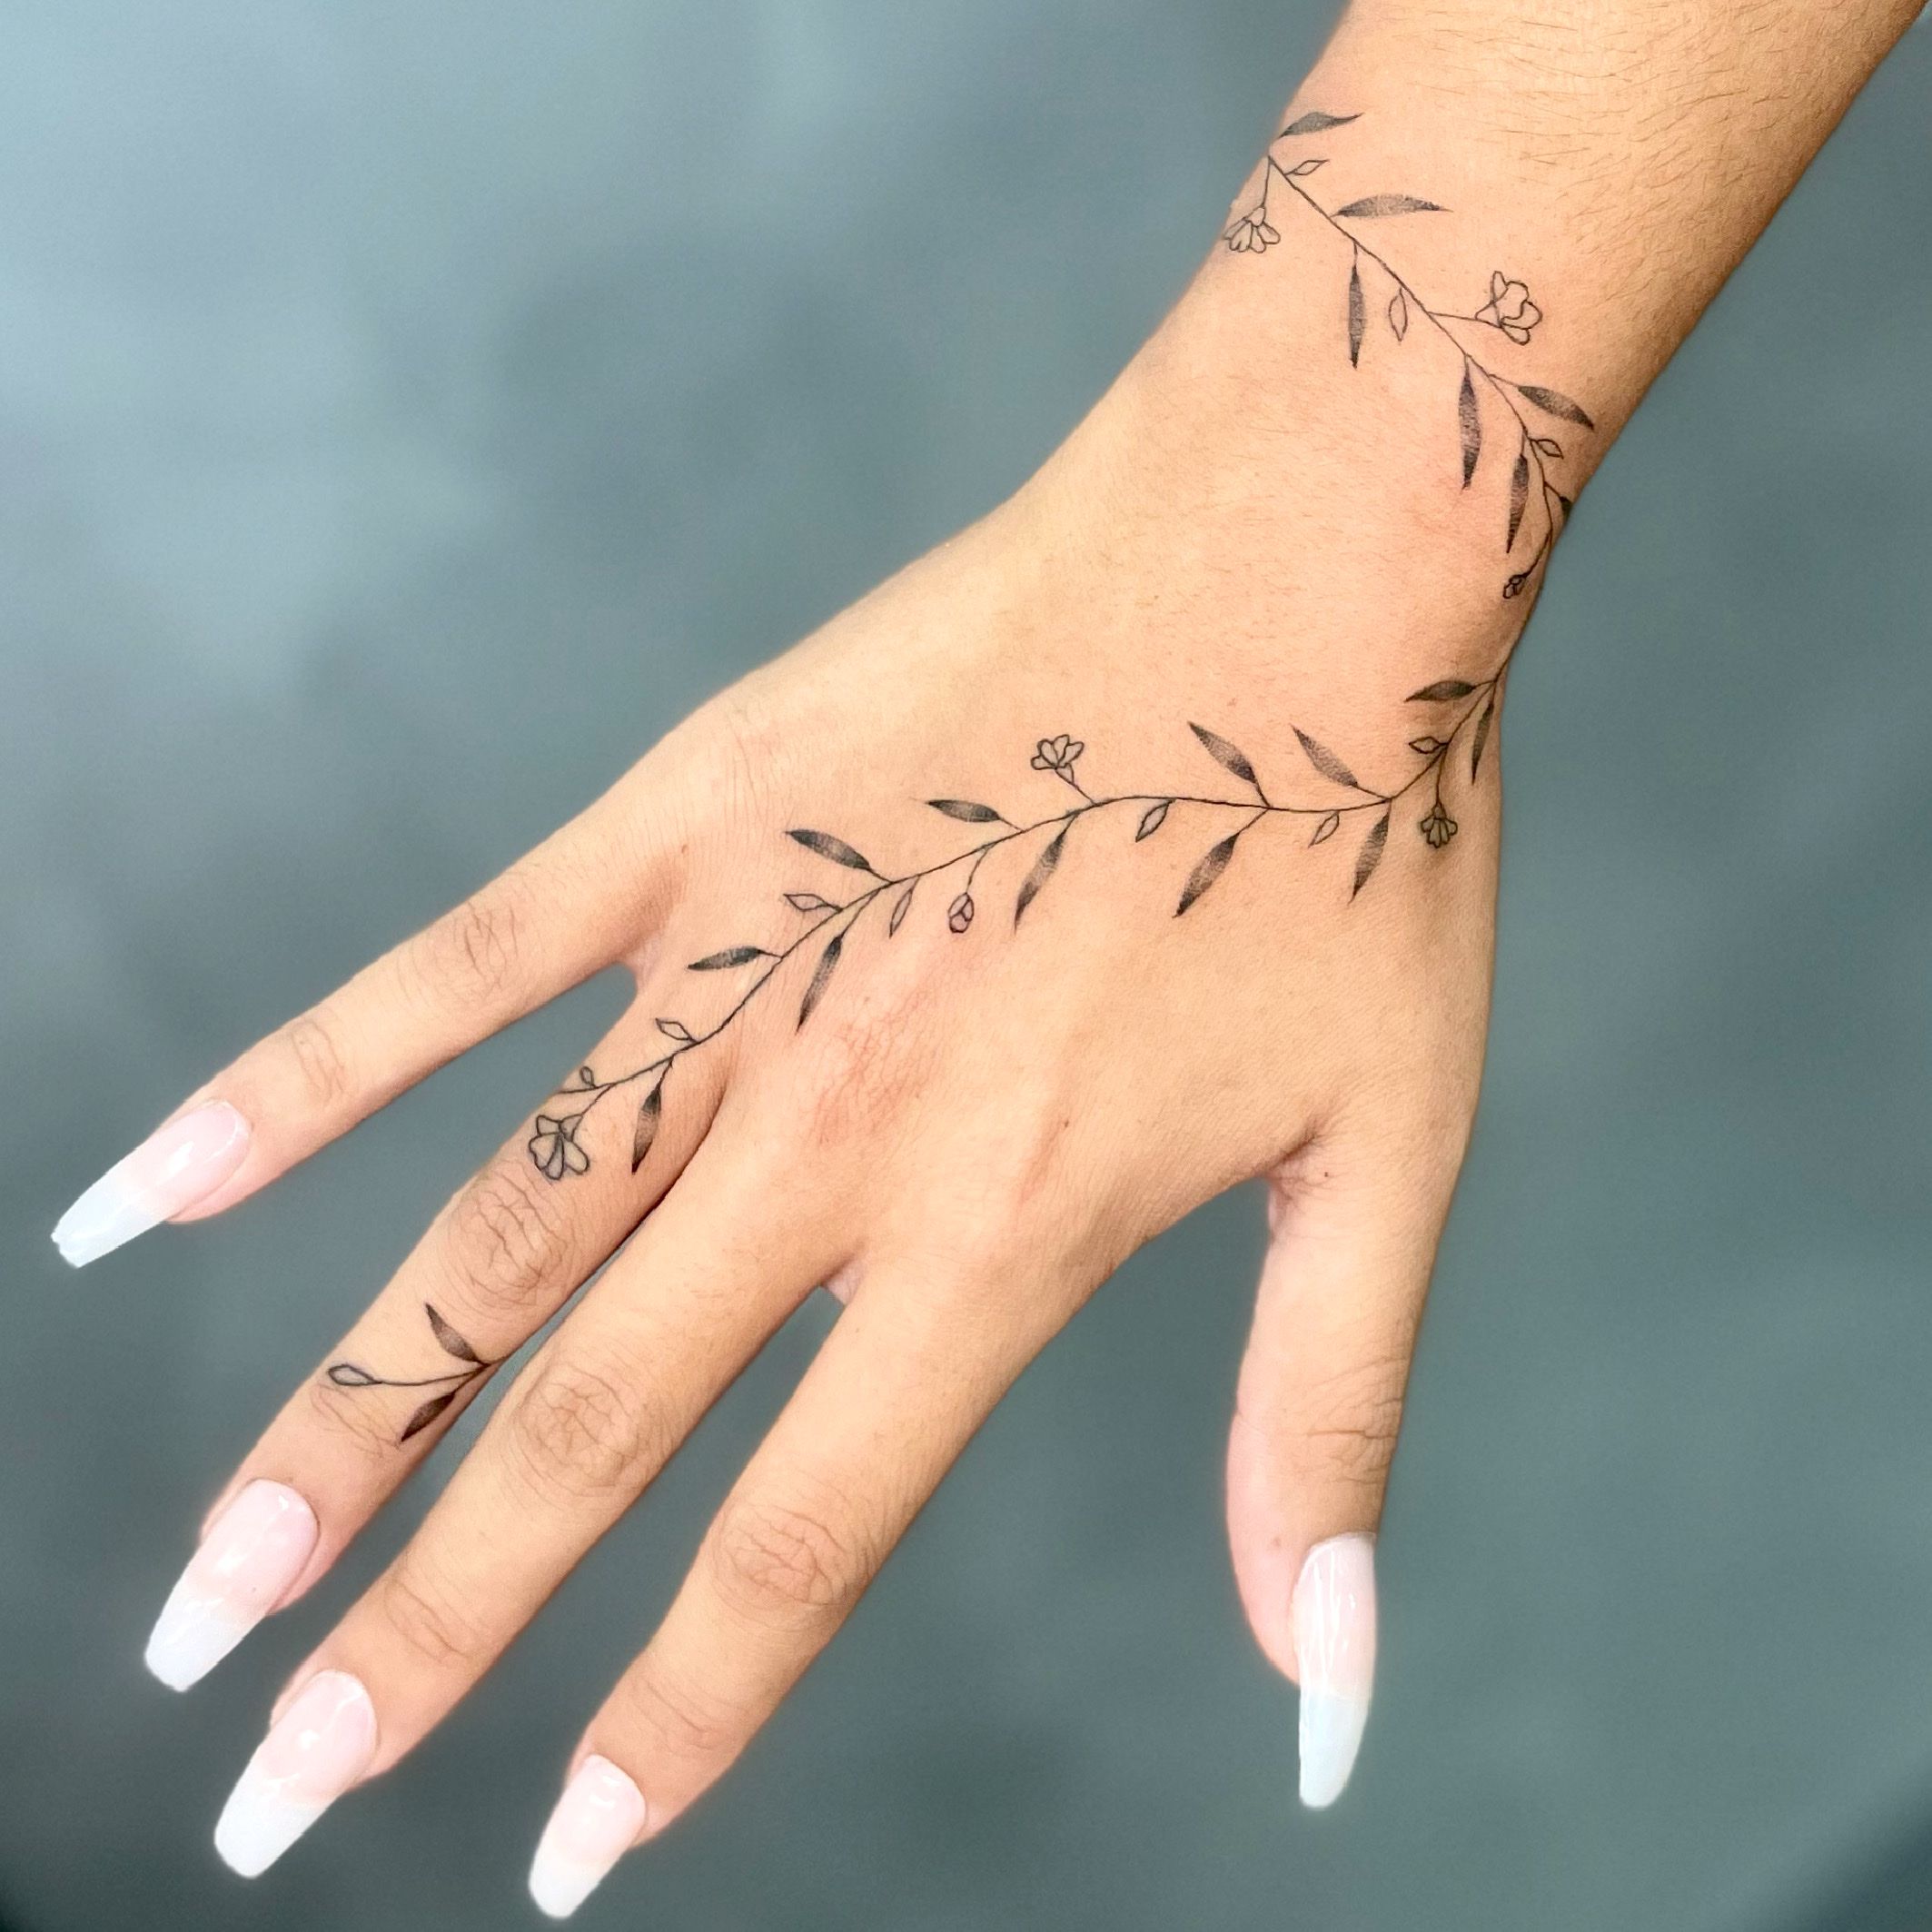 Northern Lights Tattoo  Middle finger vines tattooed by Melissa  seagullartco art artist tattoo tattooartist alaska anchorage 907  alaskatattoo alaskatattooartist anchoragetattoo anchoragetattooartist  pnwtattoo pnwtattooartist 